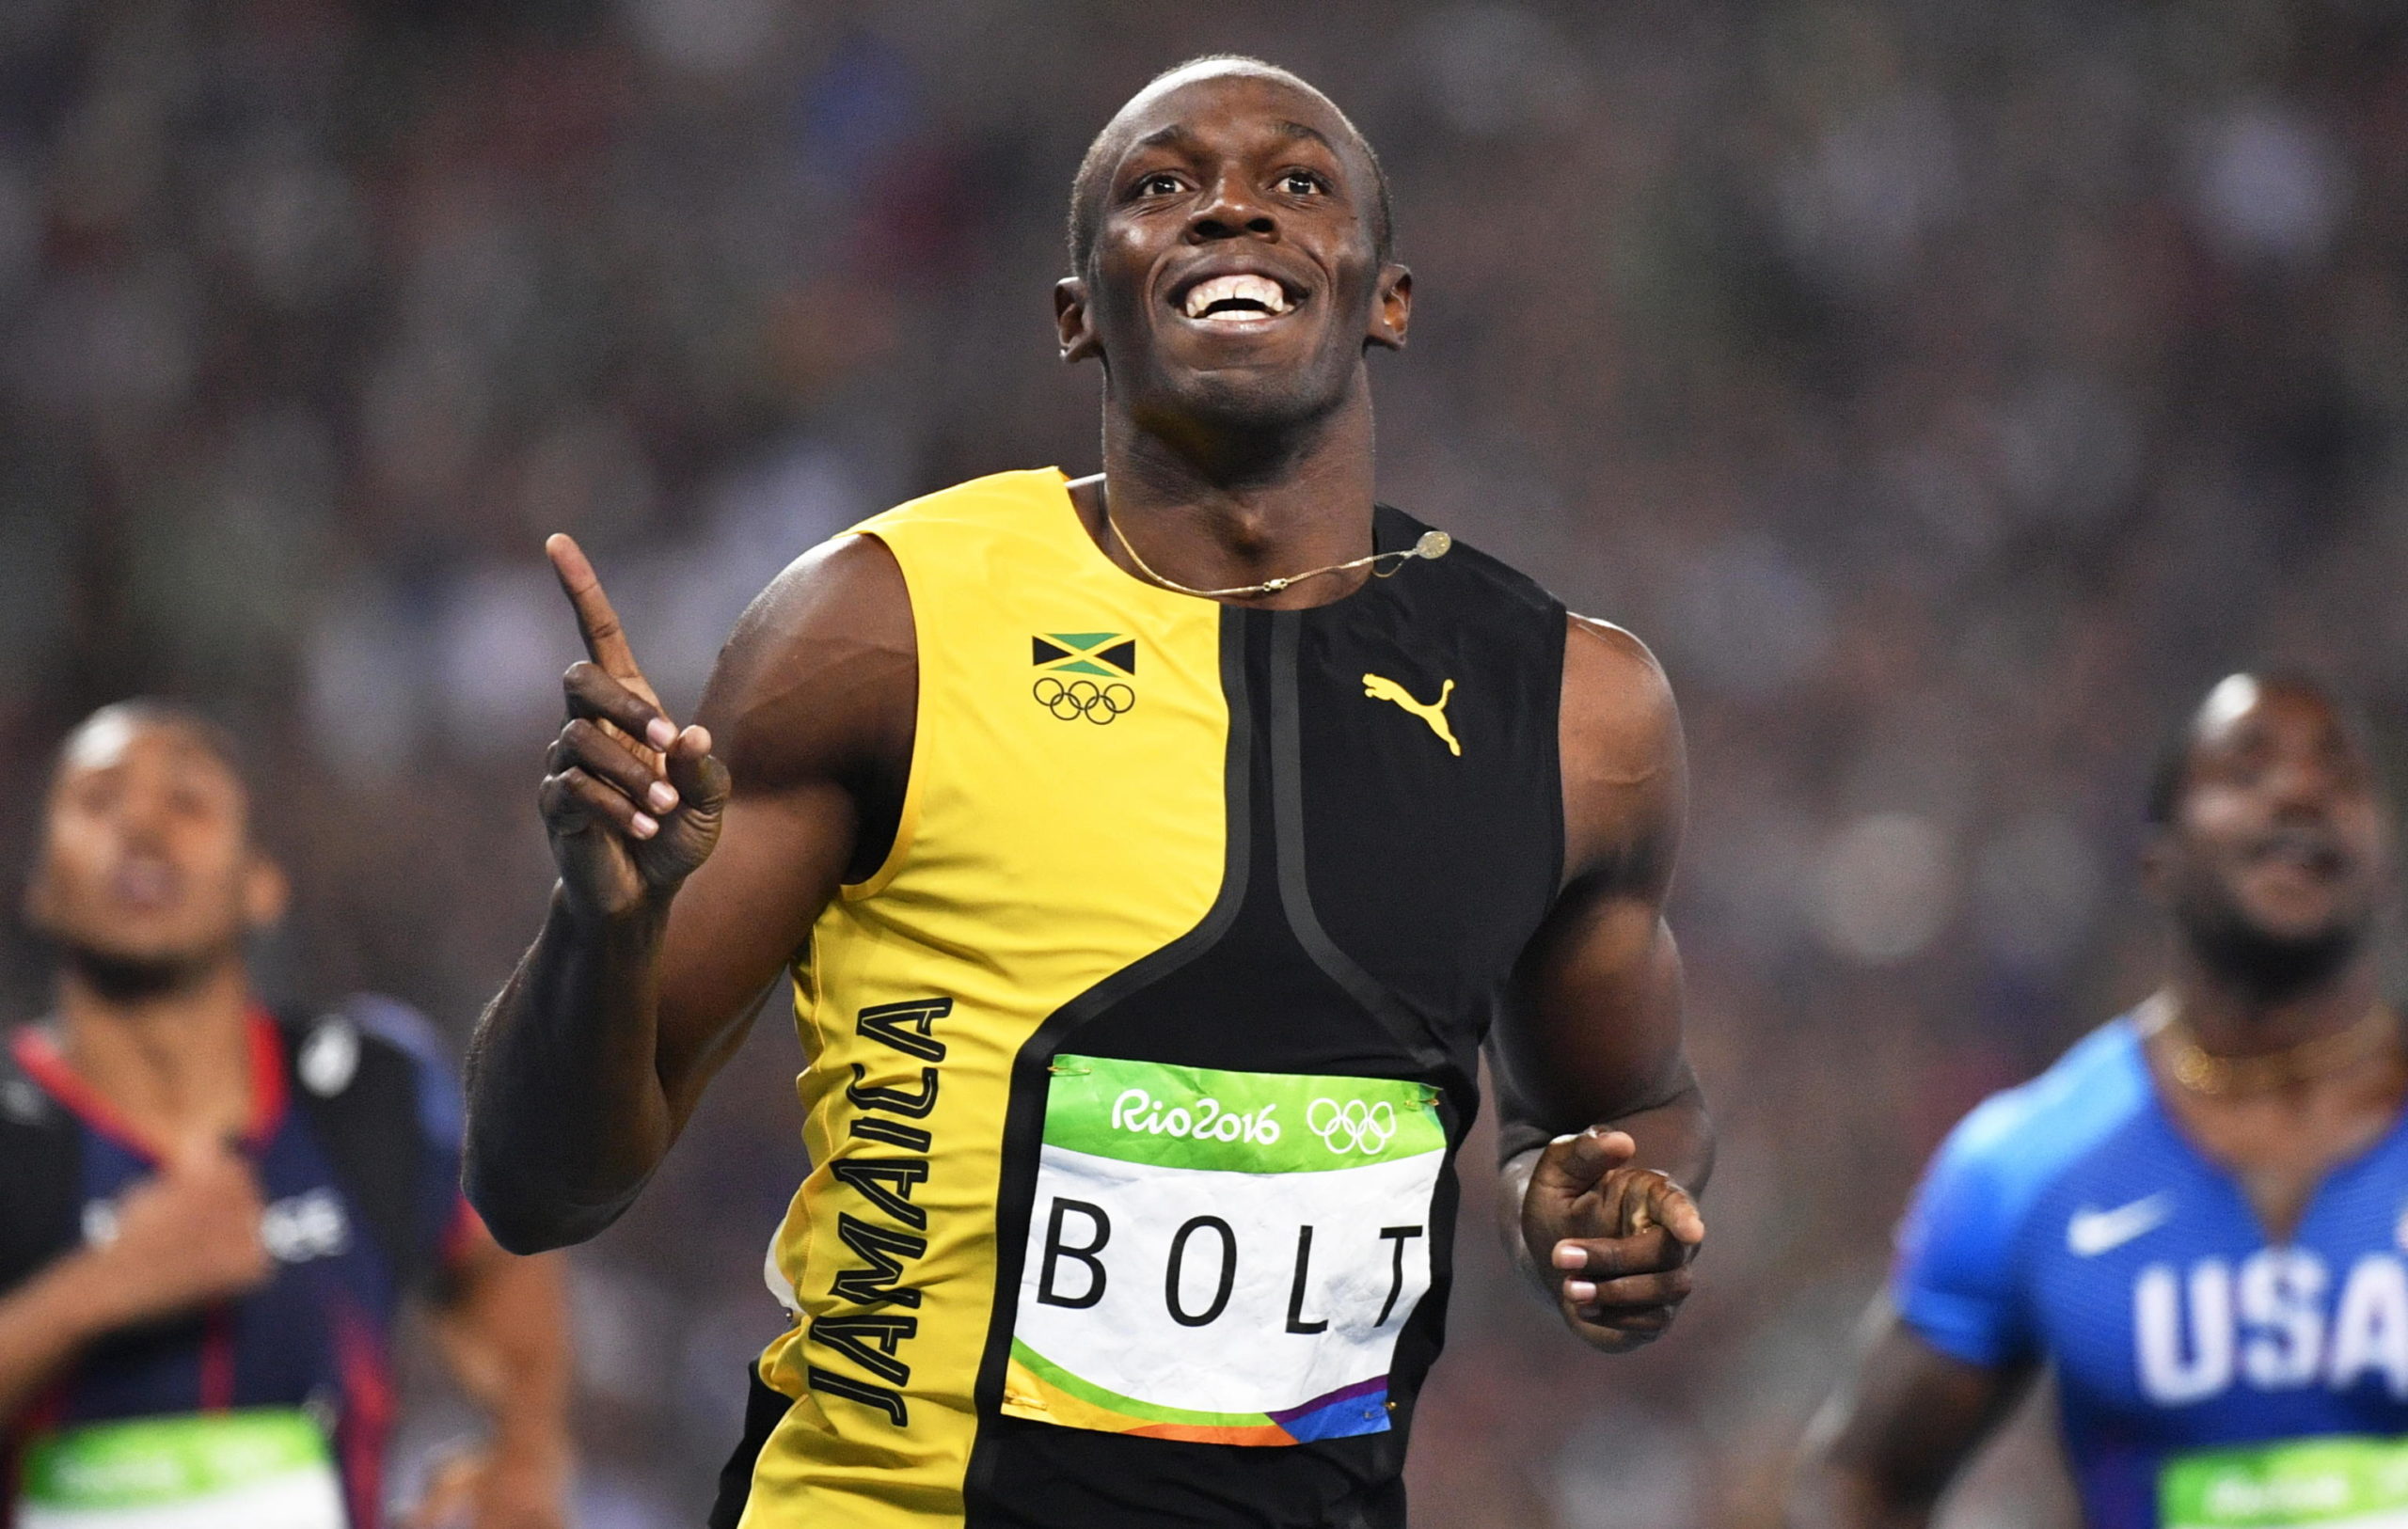 Truffa “sprint”: la vittima è Usain Bolt